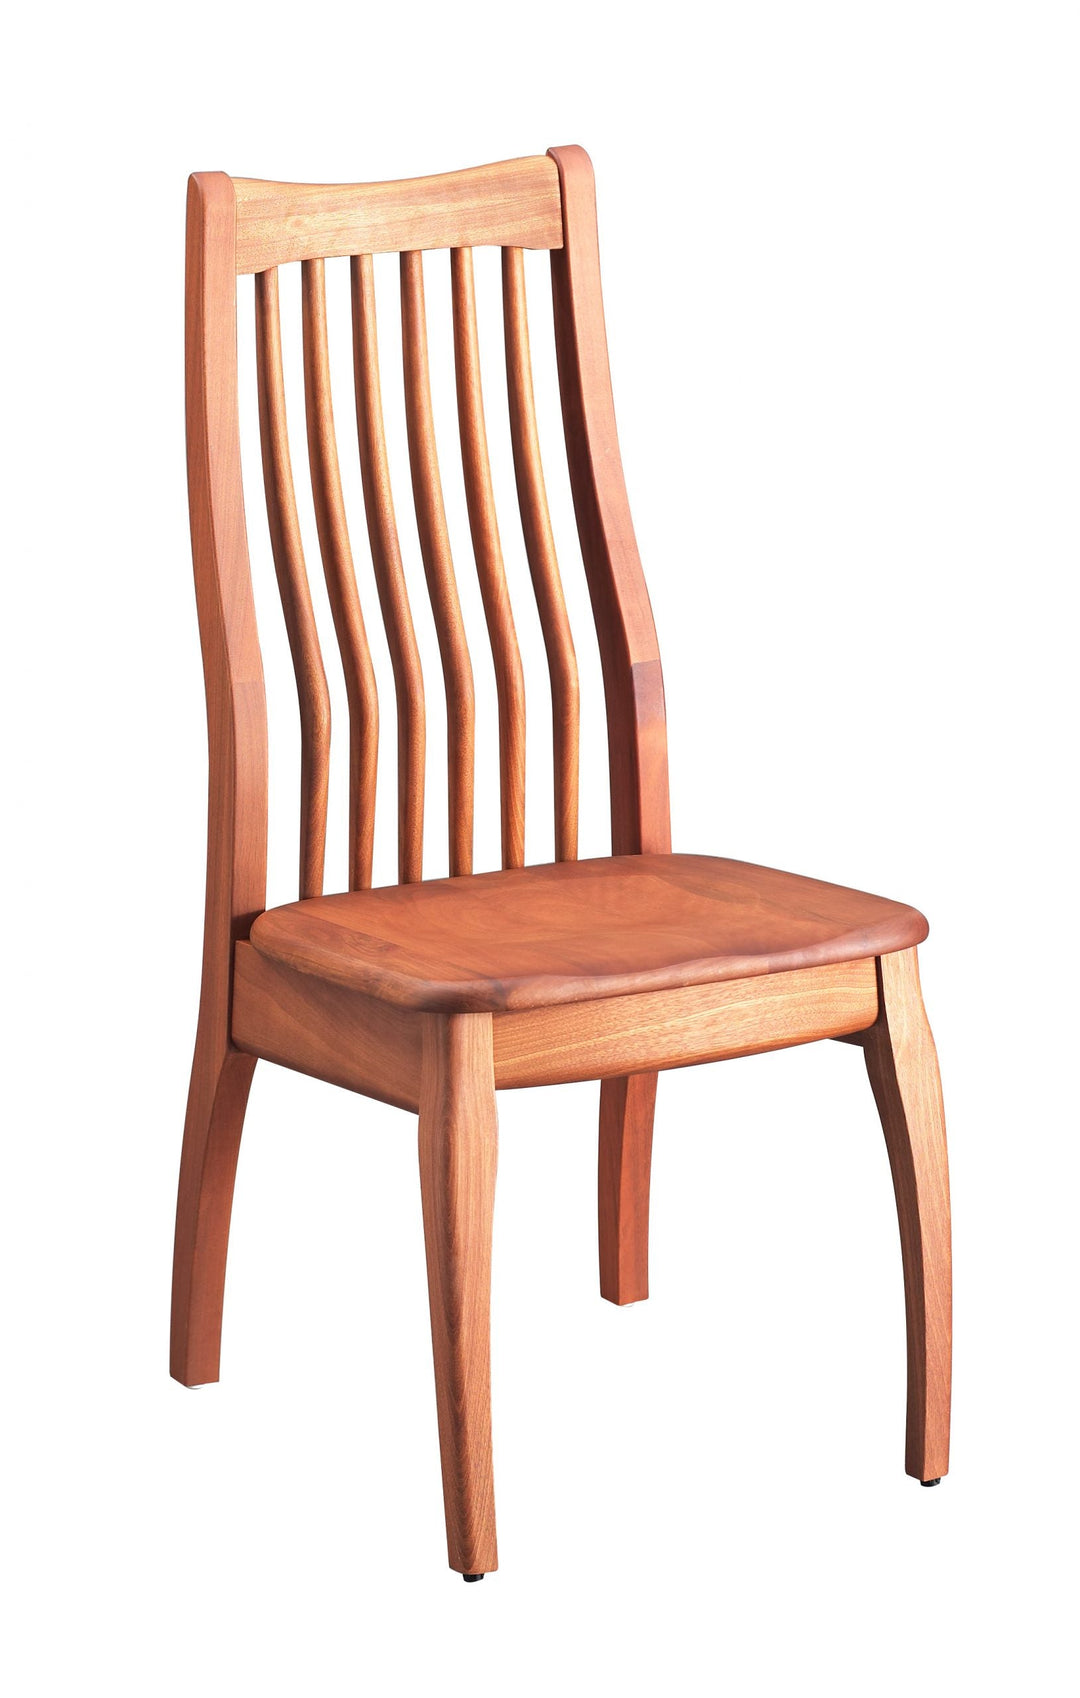 Solid Nyatoh Dining Chair 777W - Lian Star